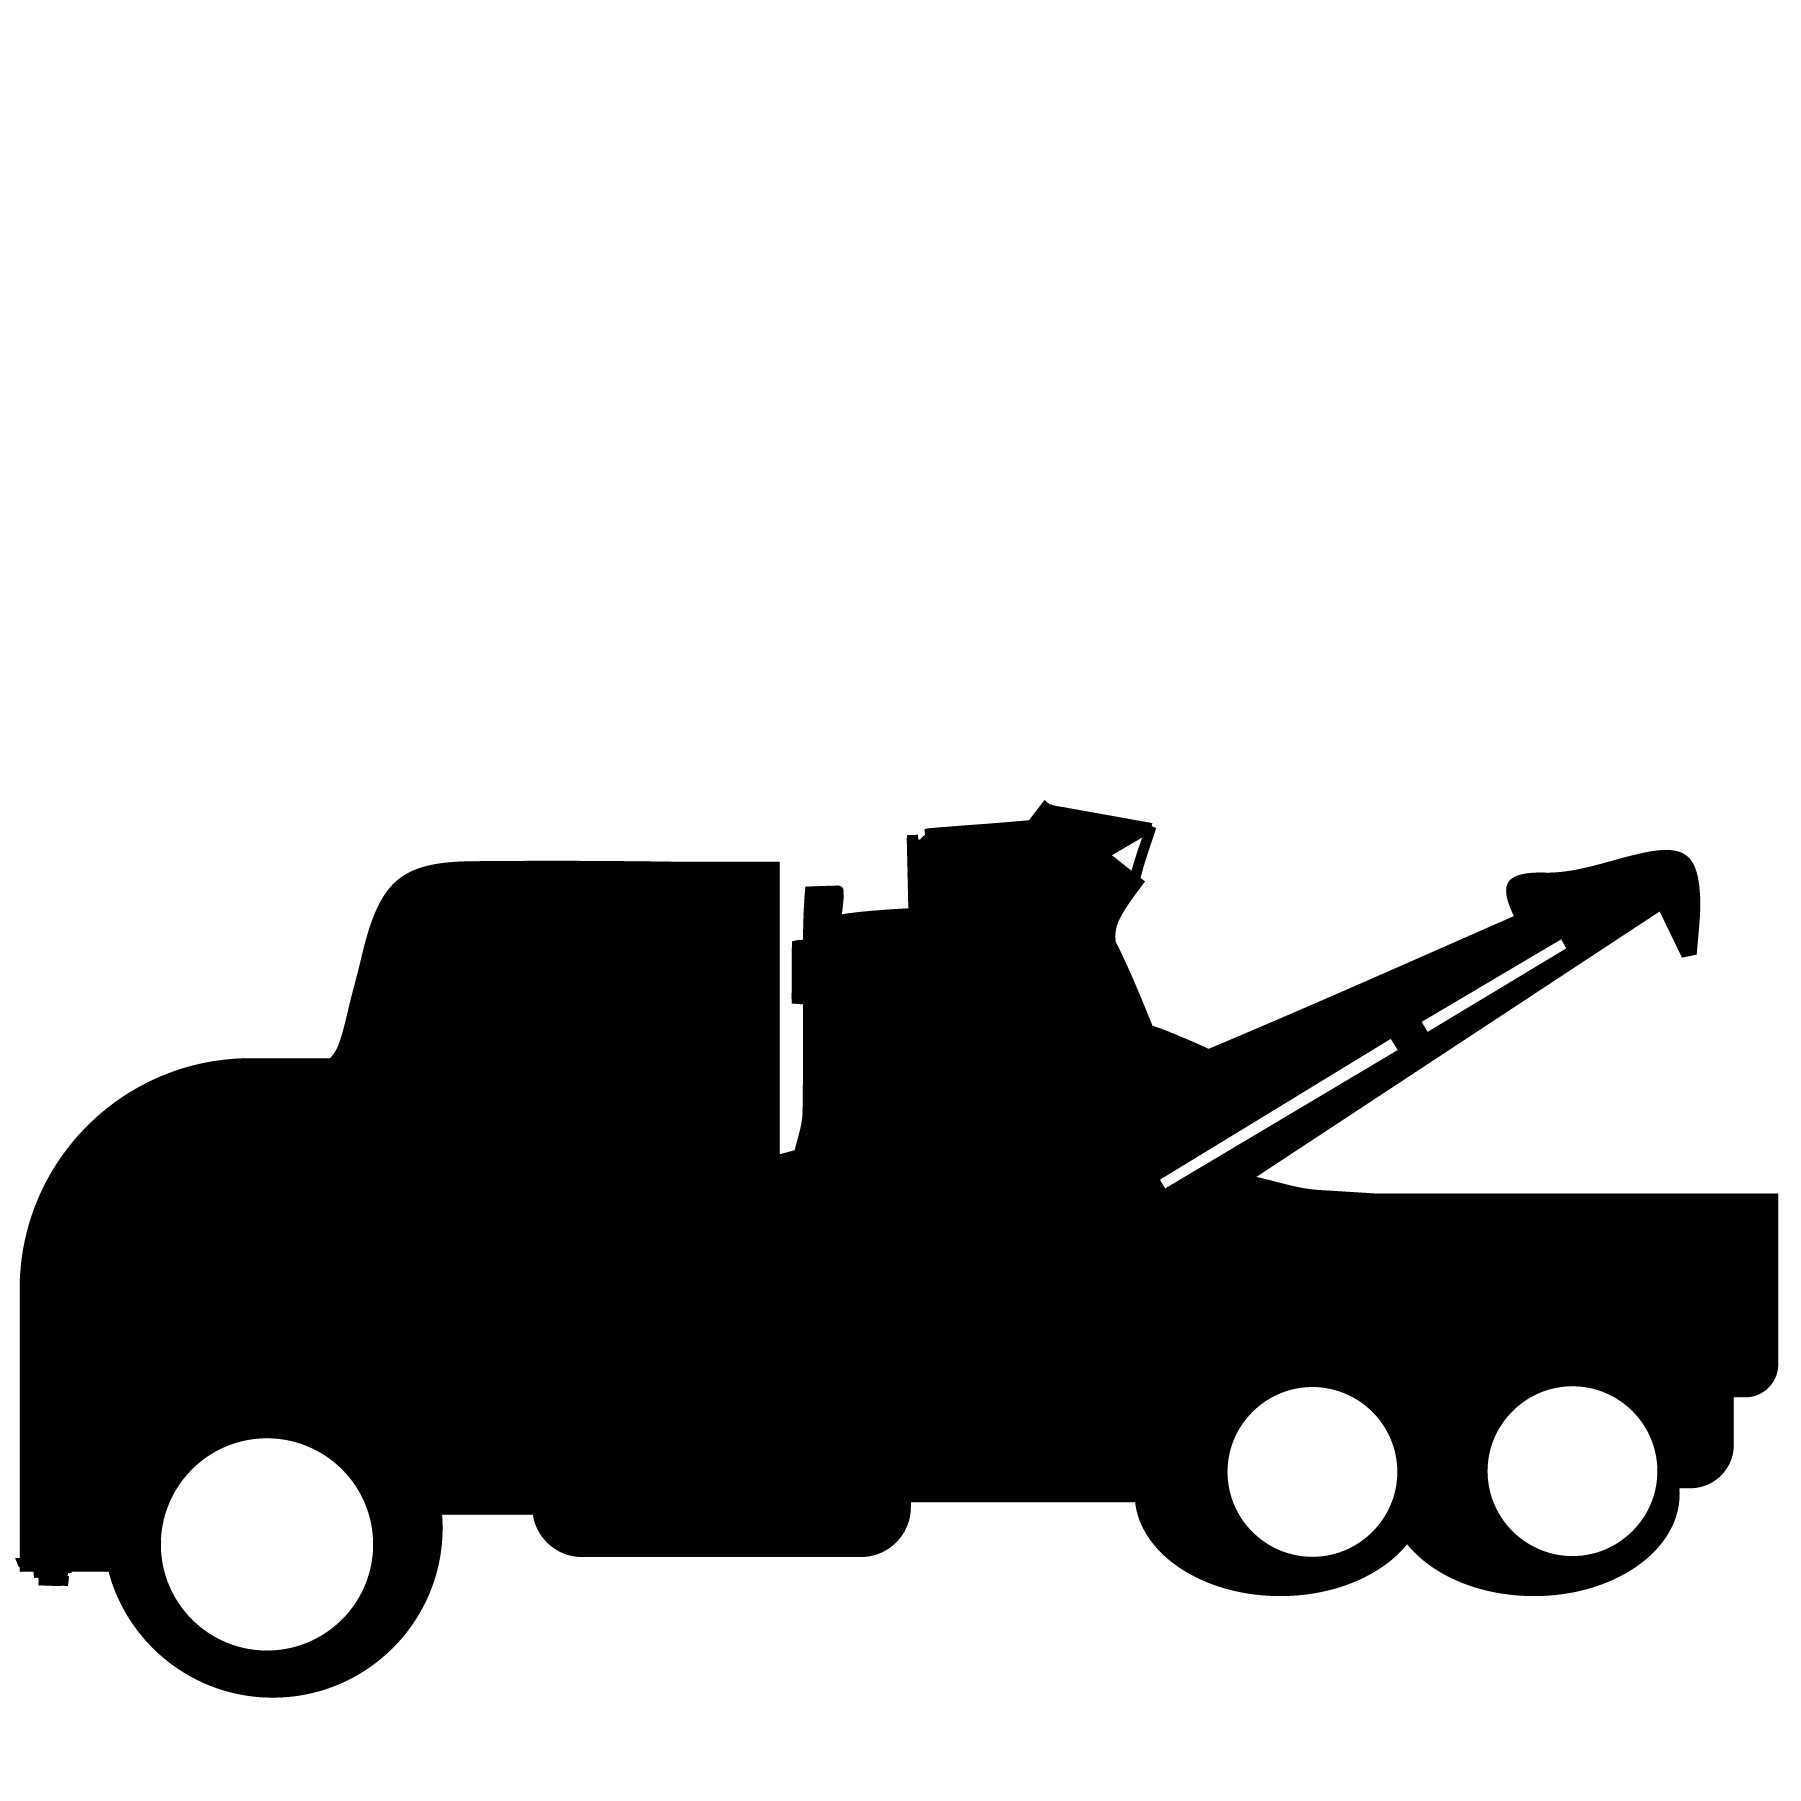 tow truck vector eps - Download Free Vectors, Clipart ...